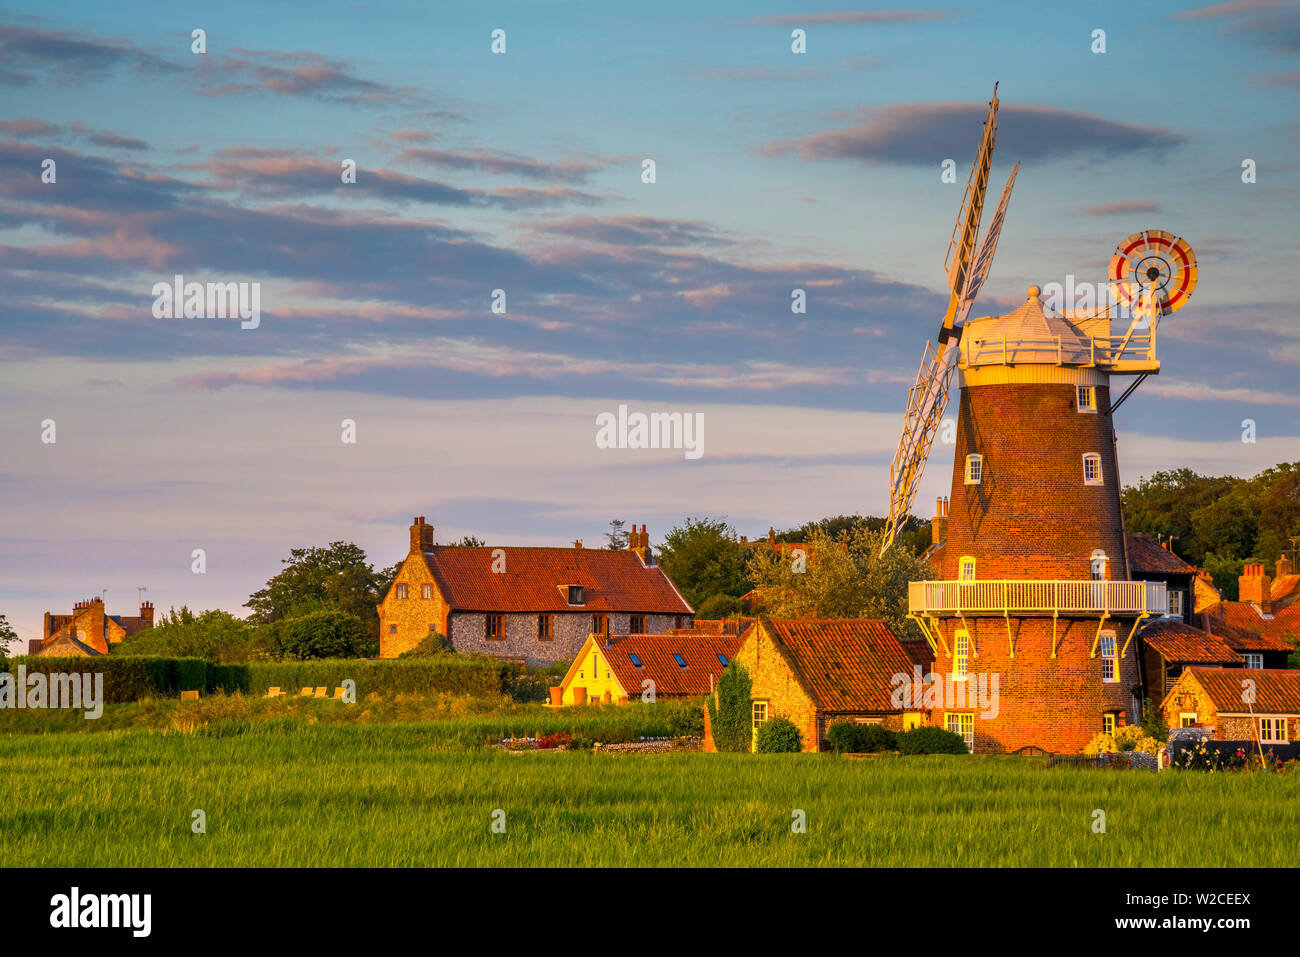 Großbritannien, England, Norfolk, North Norfolk, cley-next-the-Sea, Cley Windmill Stockfoto